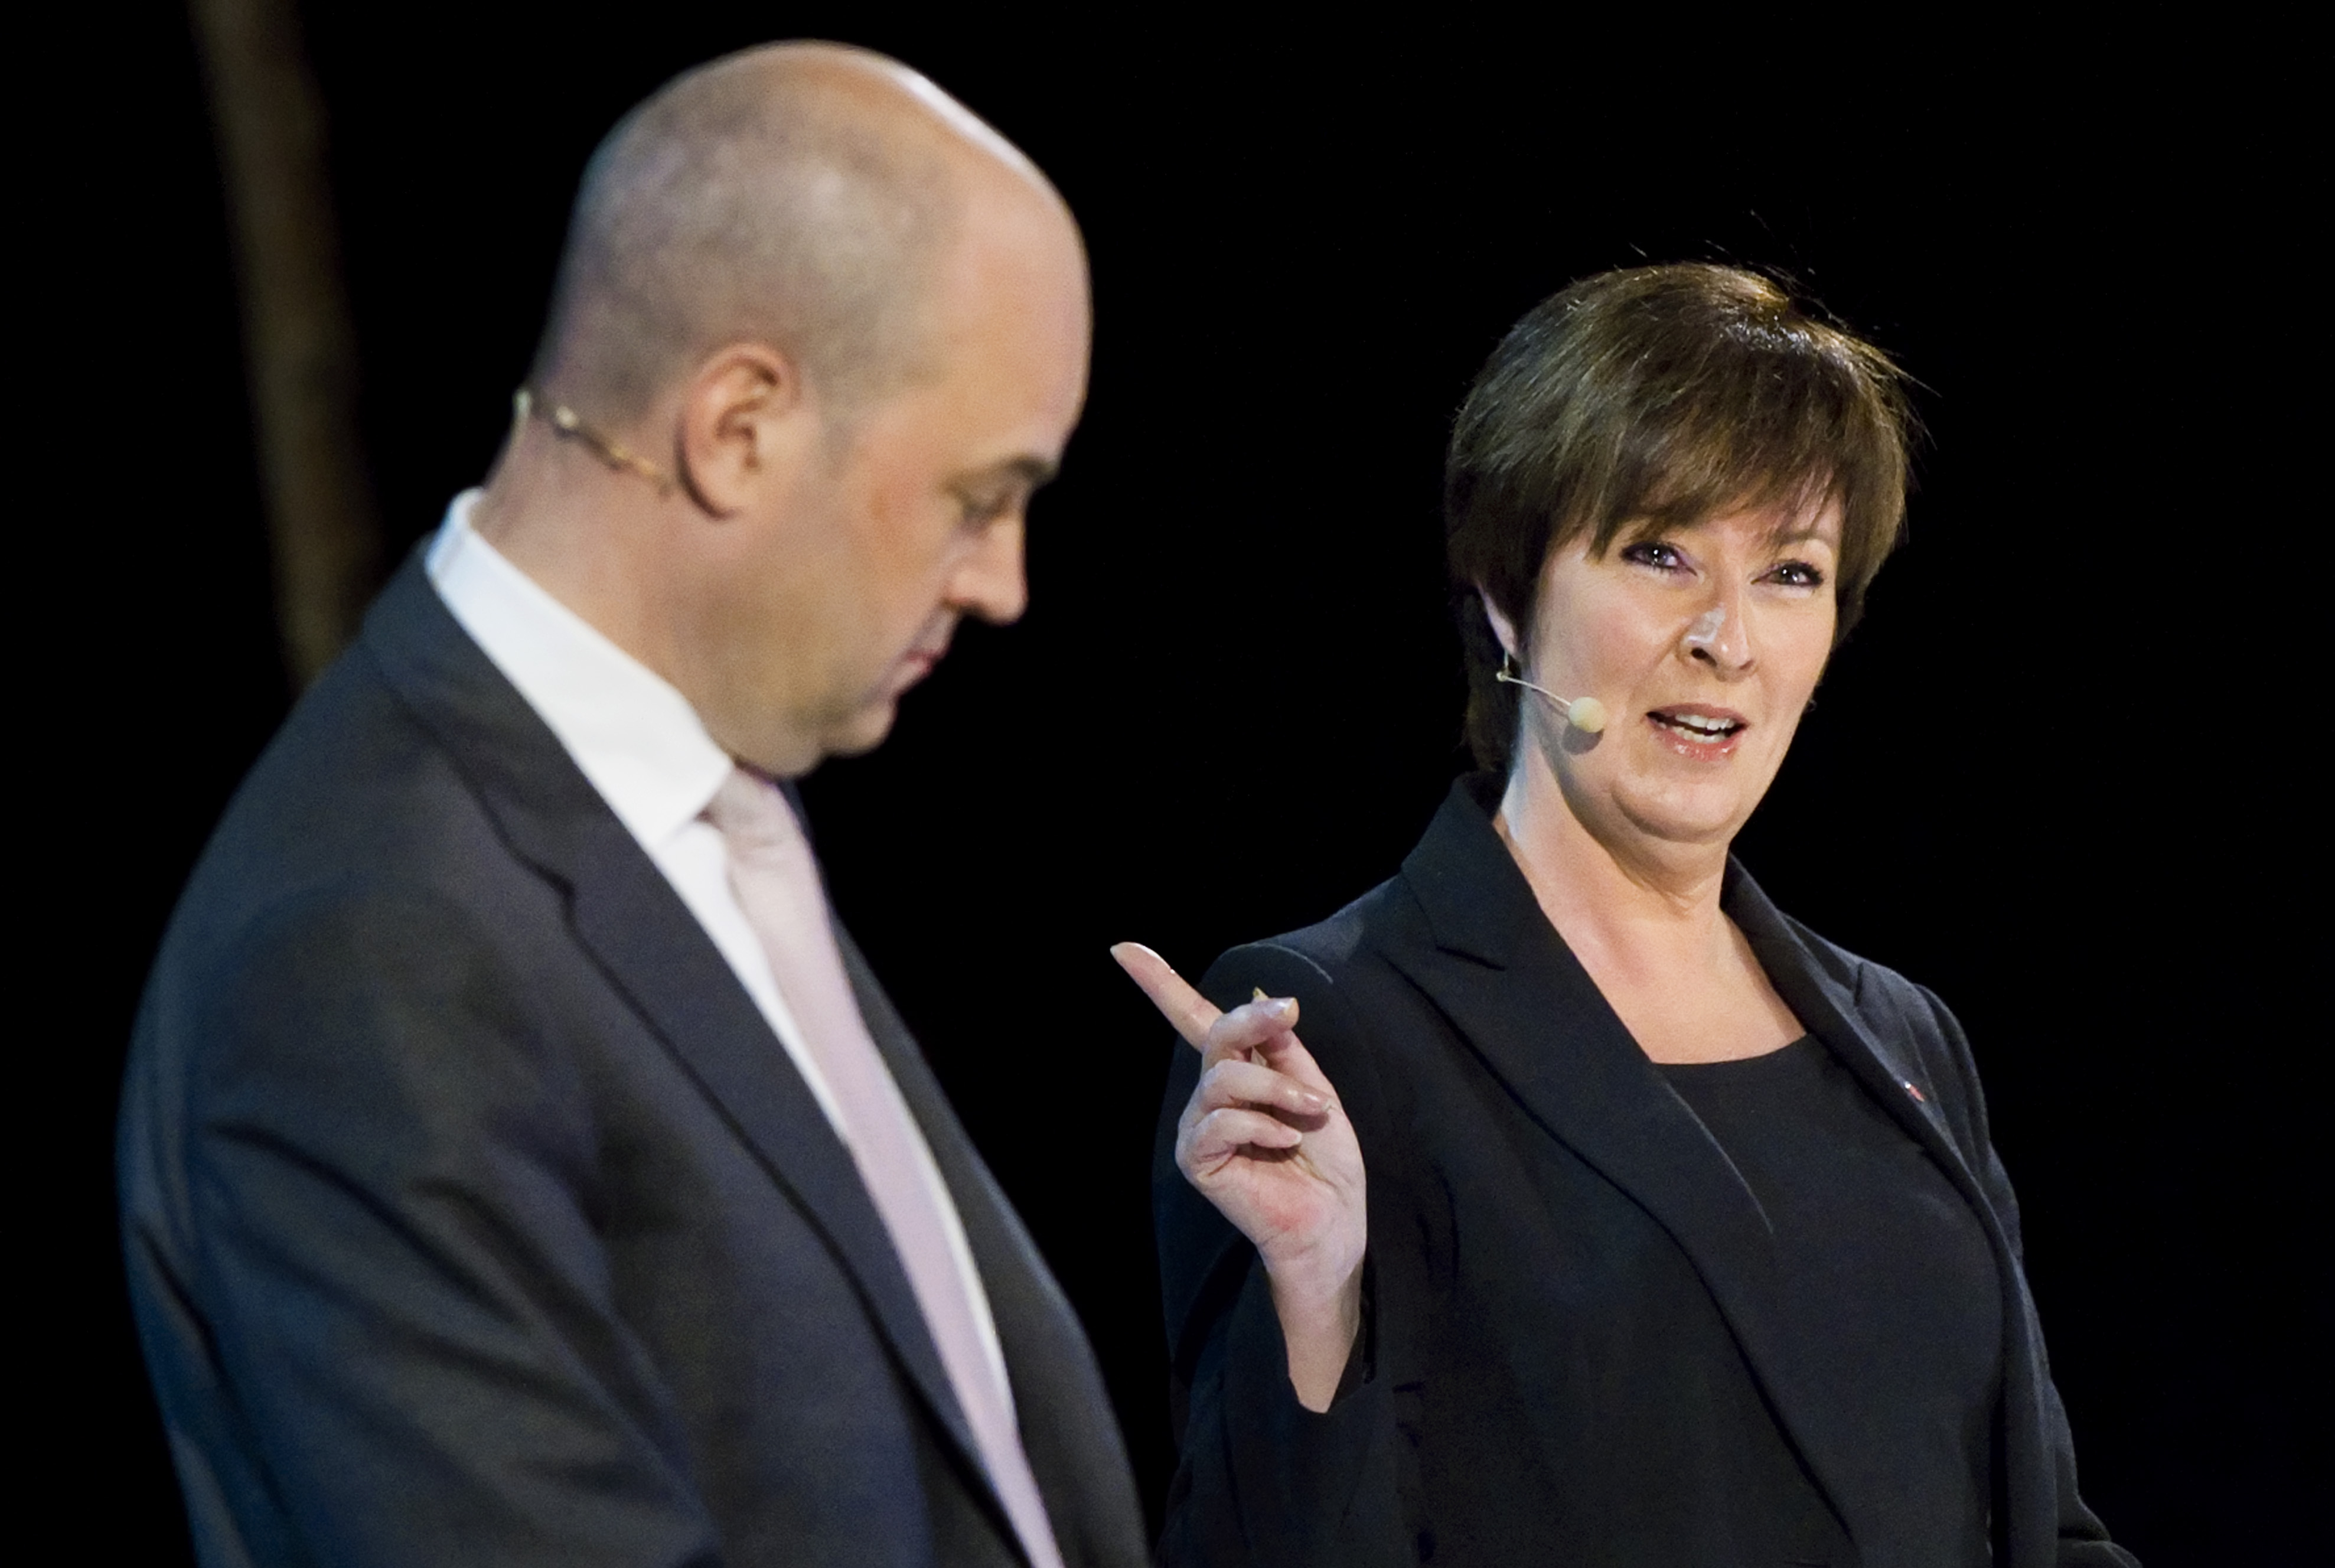 Riksdagsvalet 2010, Mona Sahlin, Fredrik Reinfeldt, Partiledardebatt